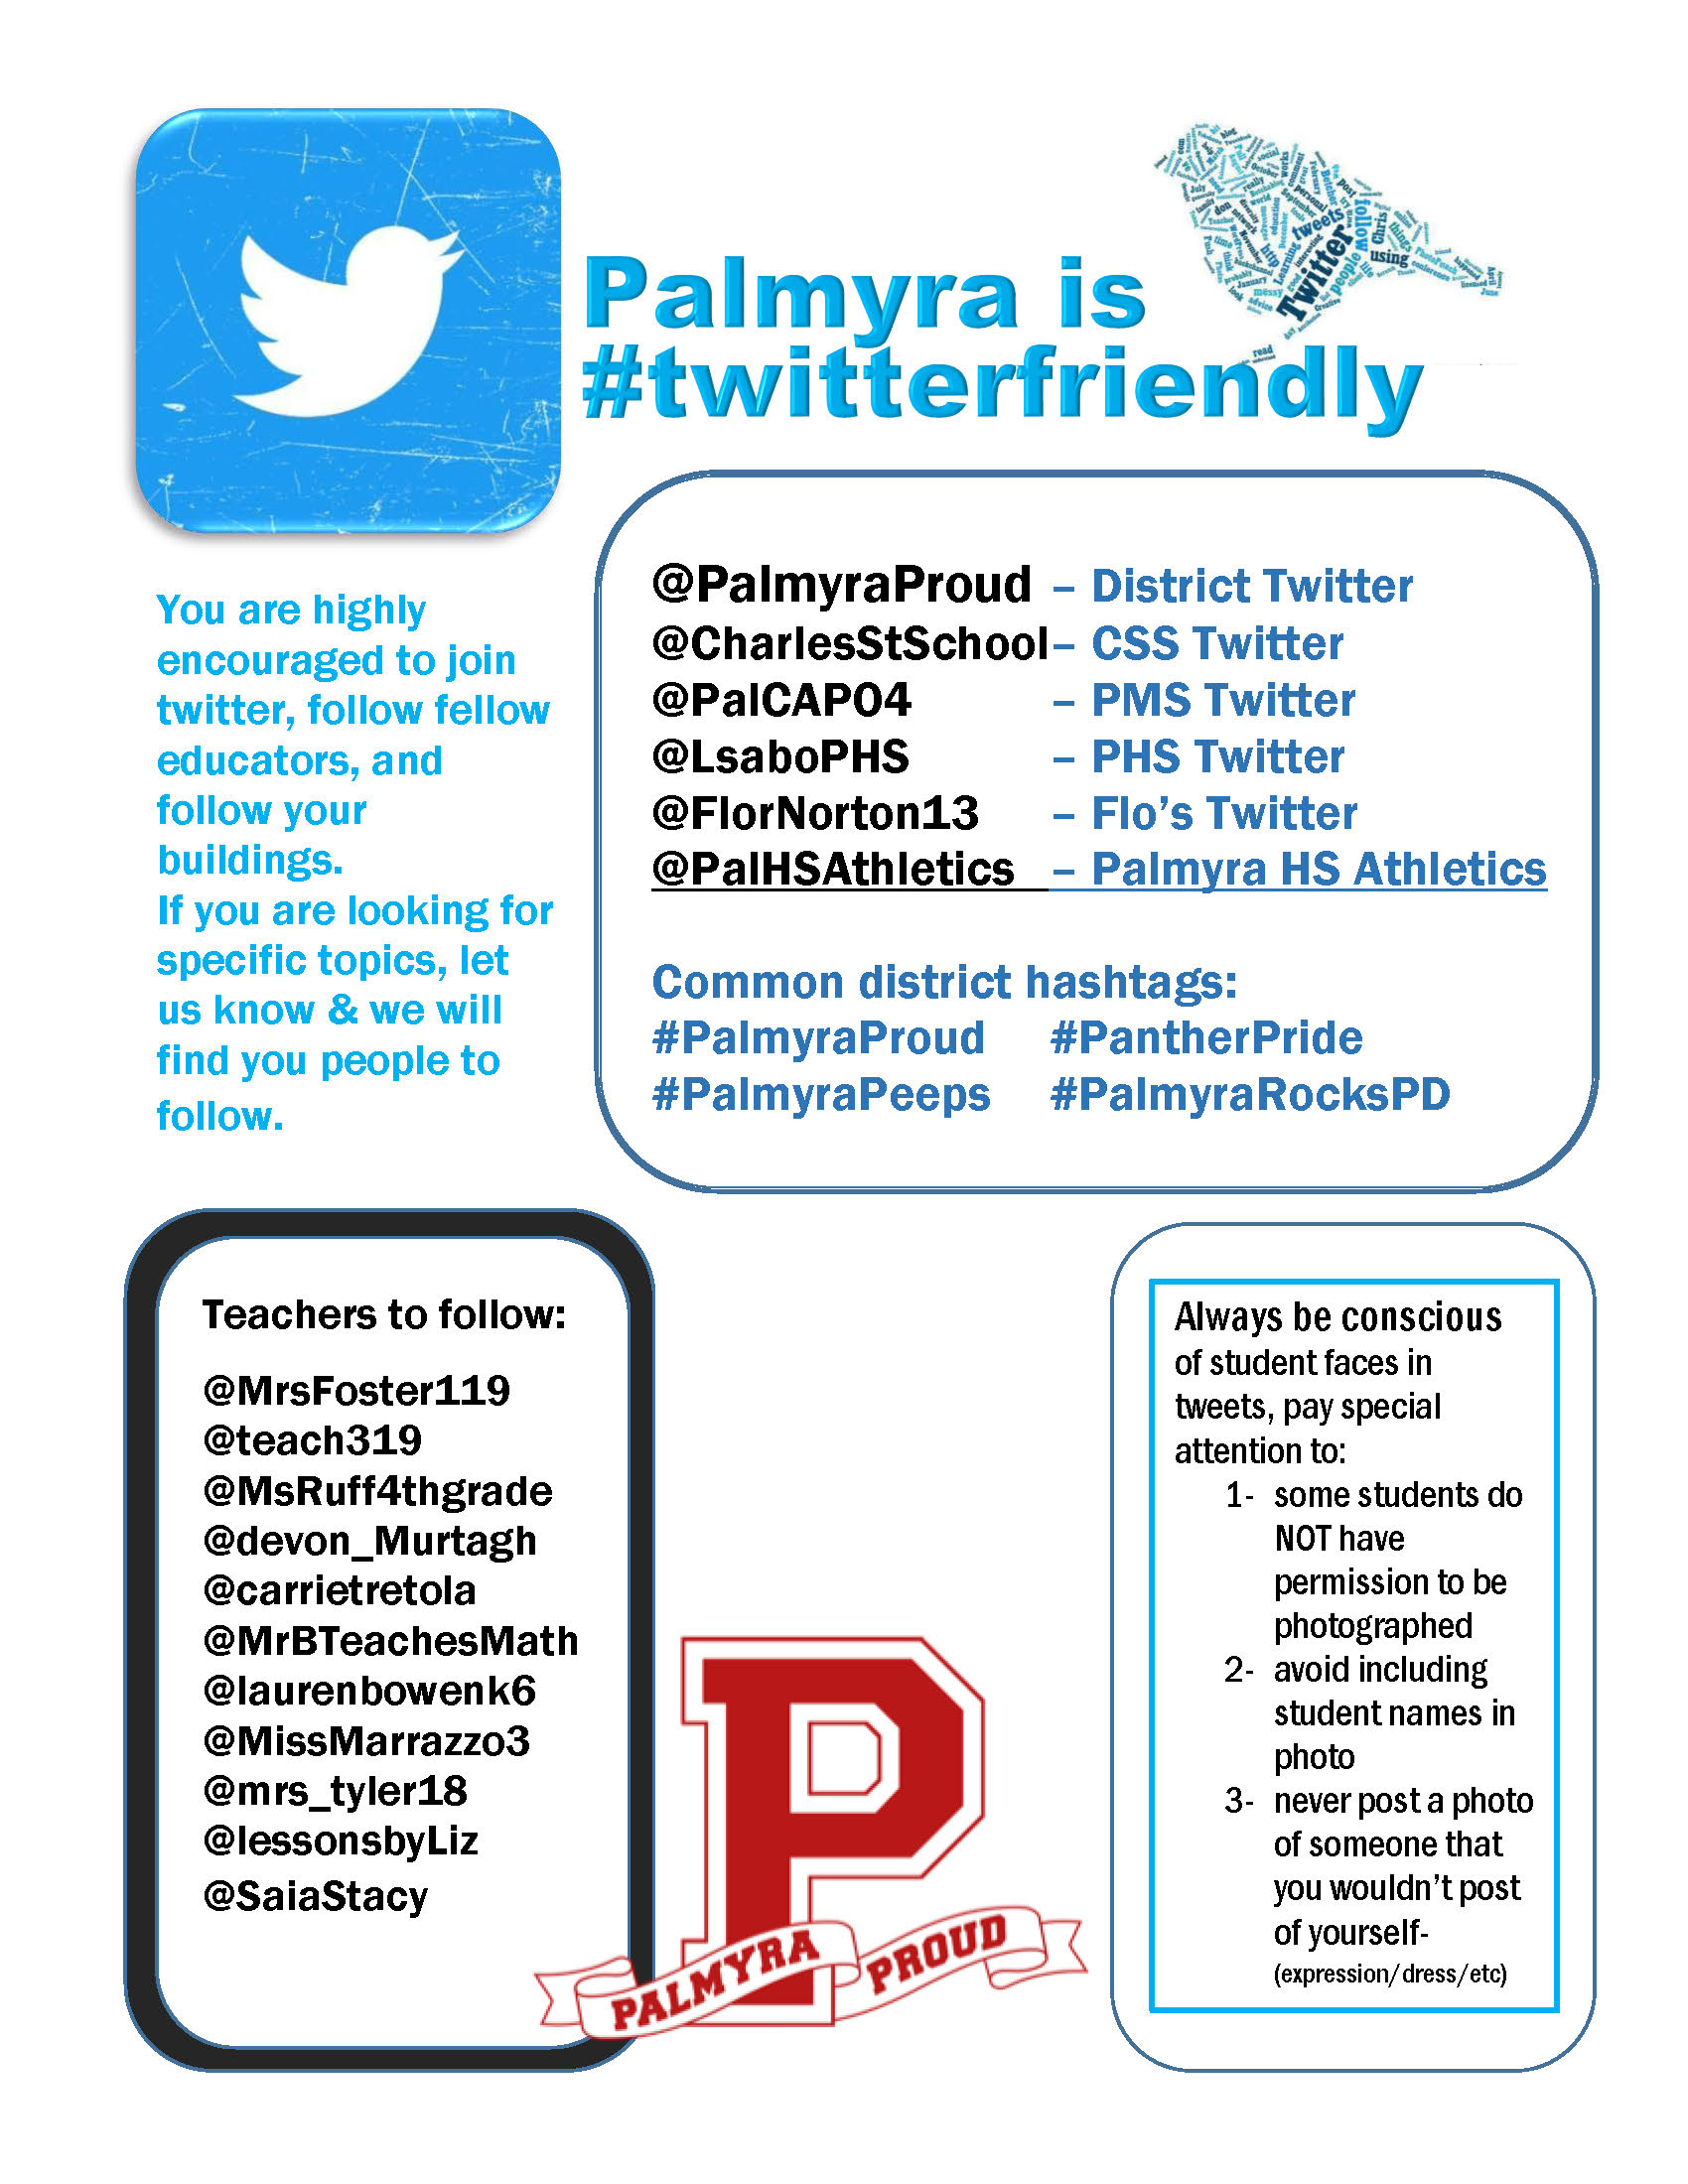 Palmyra is twitter friendly